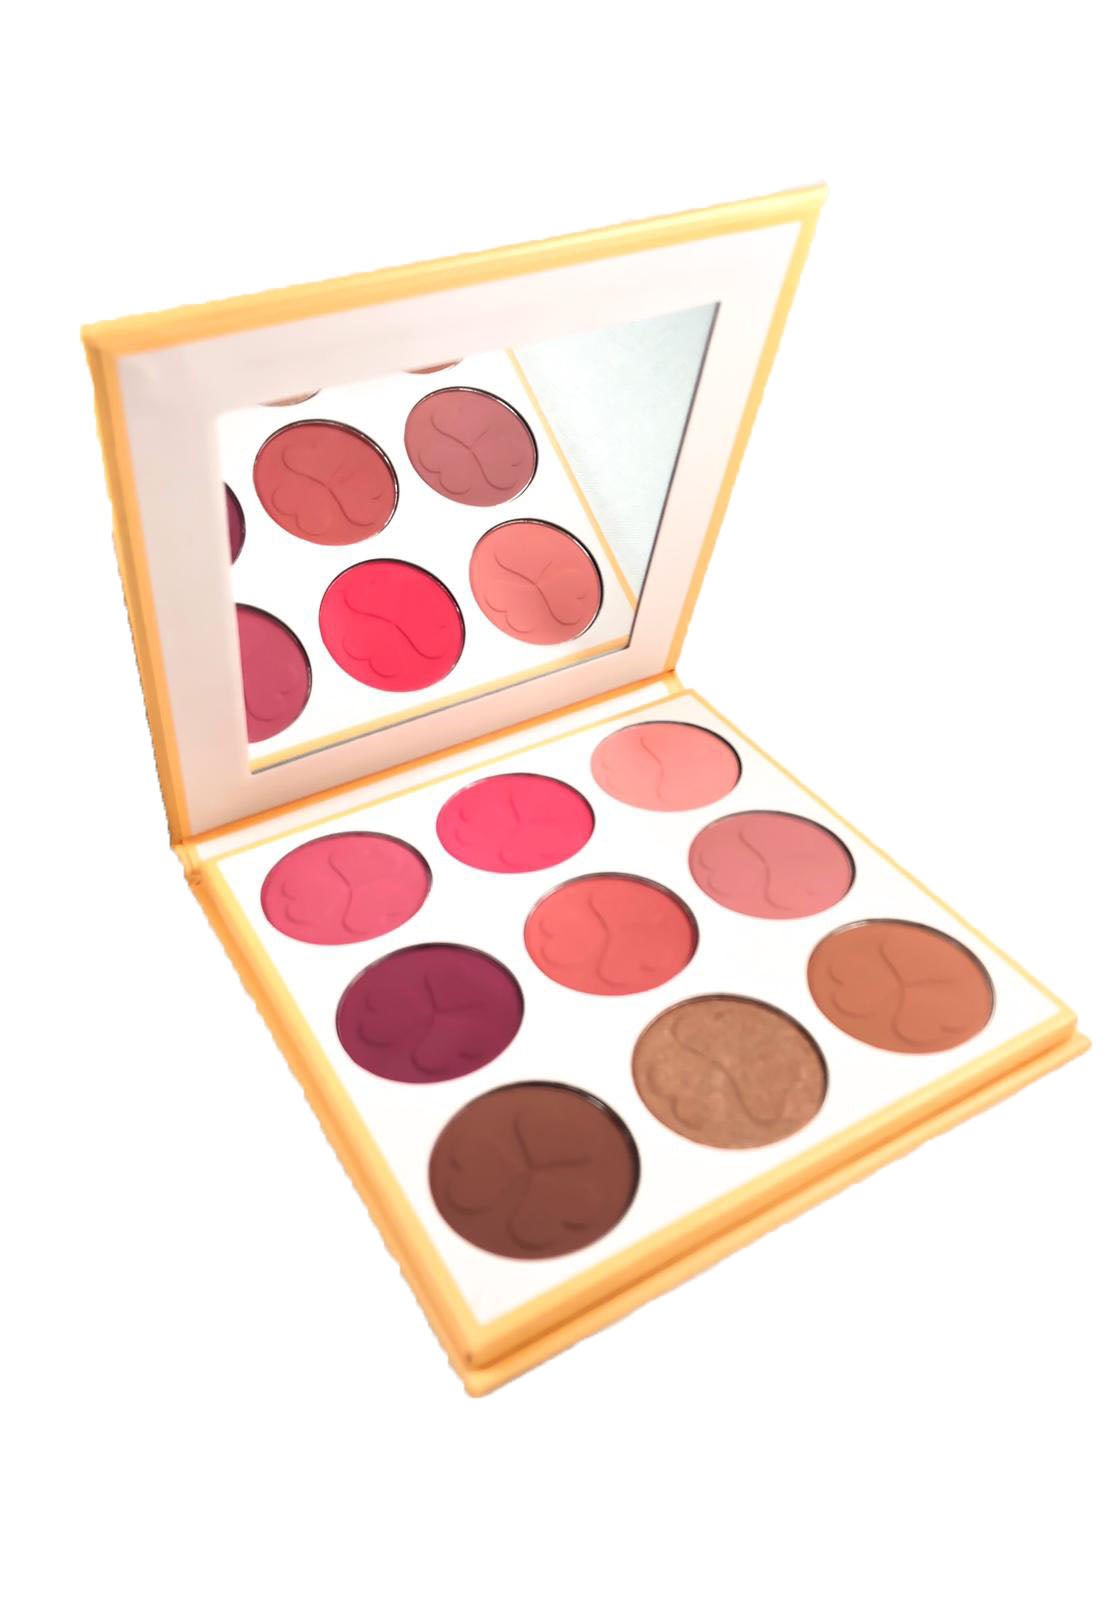 Sakura Blush Palette - Skin Tone Beauty Products